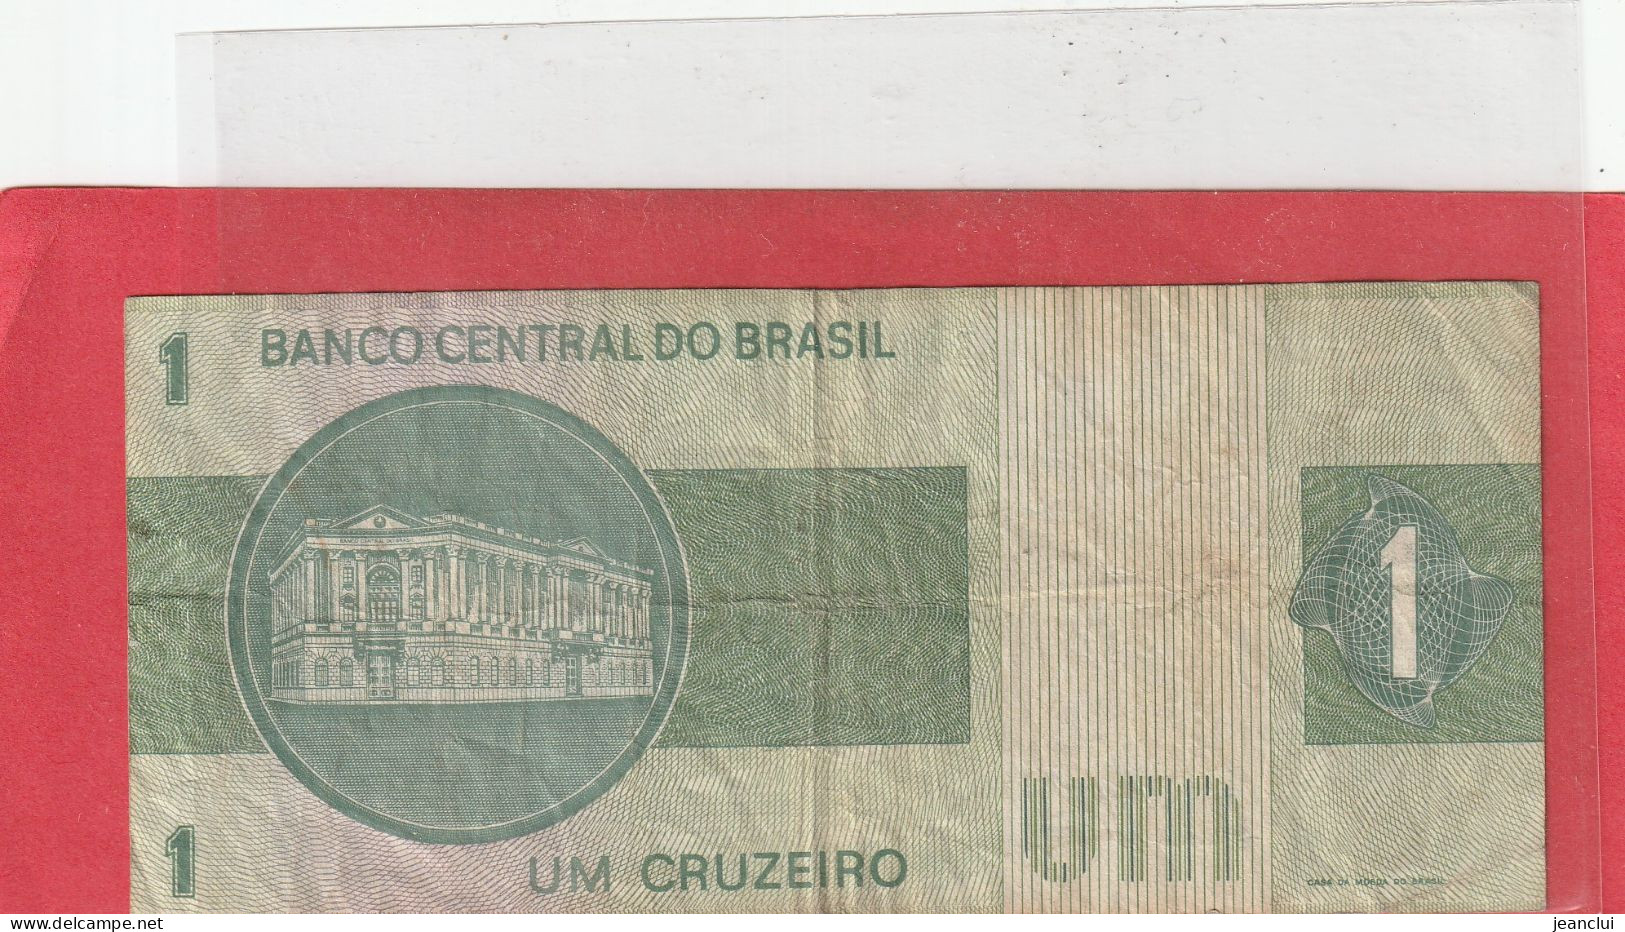 BANCO CENTRAL DO BRASIL  . 1 CRUZEIRO .( 1972-81 )  N° B 09183 / 061105 . 2 SCANNES  .  BILLET USITE - Brasilien